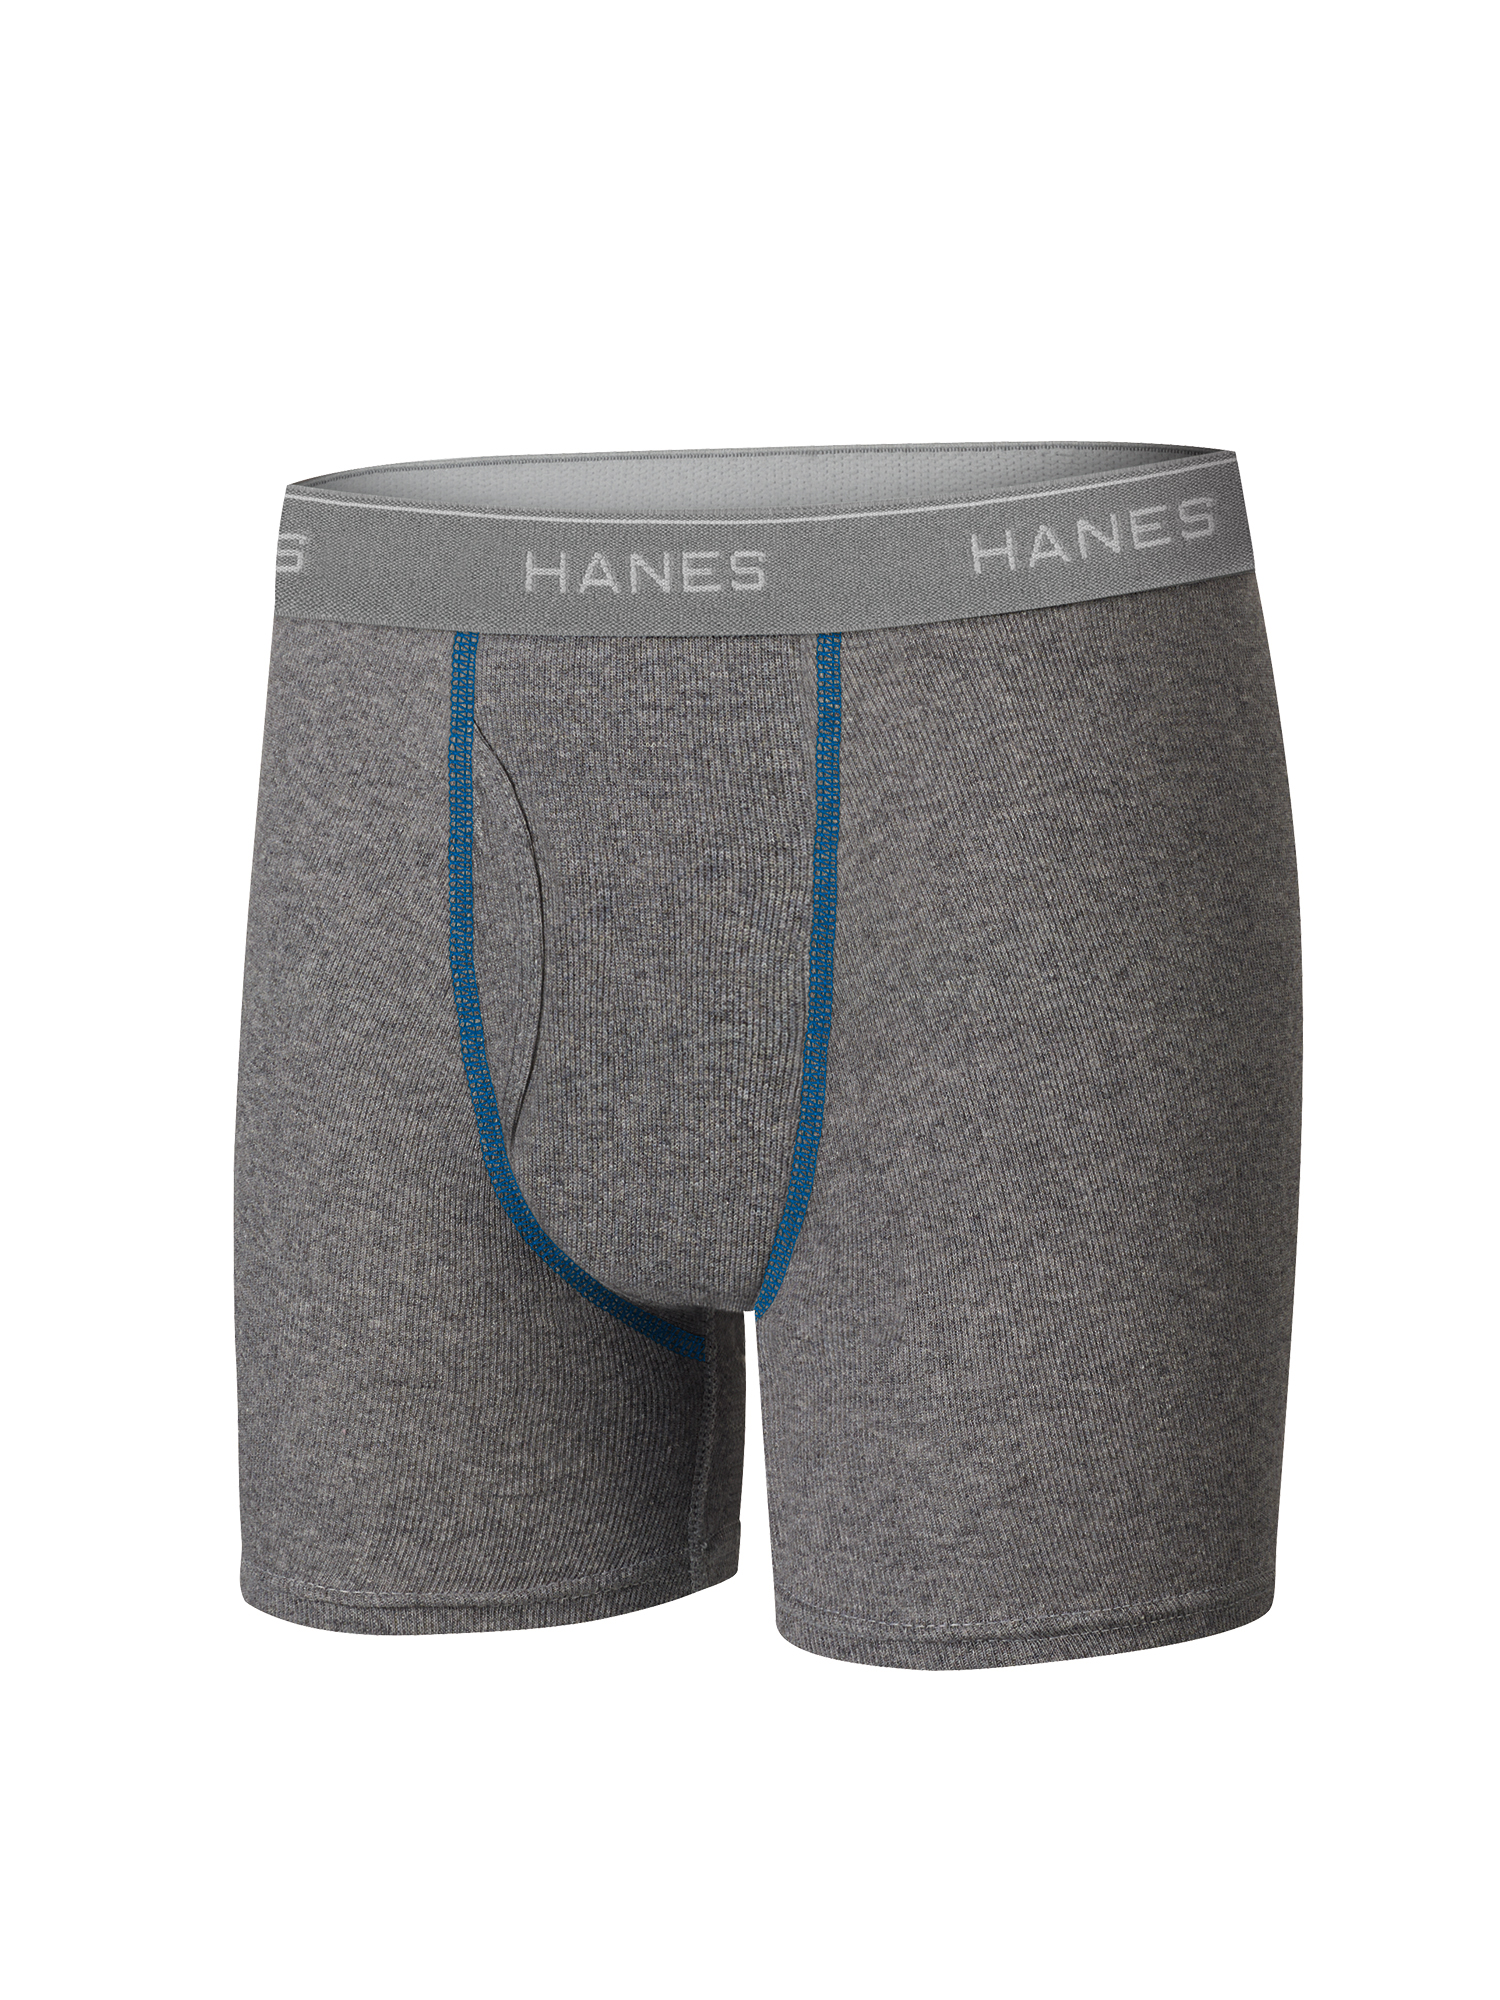 Hanes Boys, 10 + 3 Bonus Pack, Tagless, Cool Comfort Boxer Briefs, Sizes S (6/8) - XL (18/20) - image 3 of 6